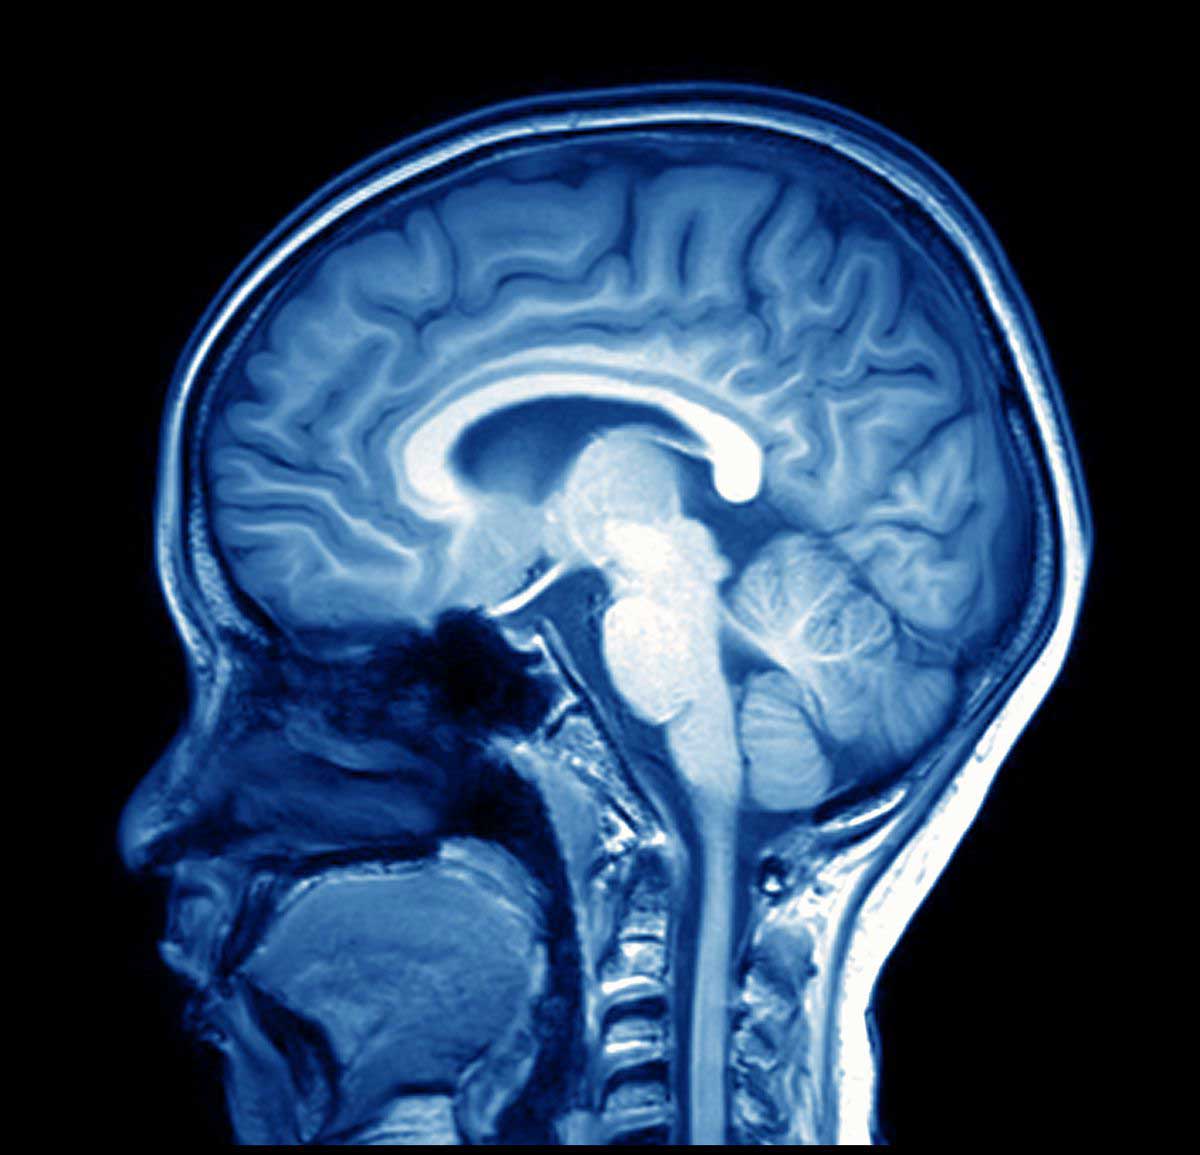 Advanced MRI brain scan analysis may help predict stroke-related dementia